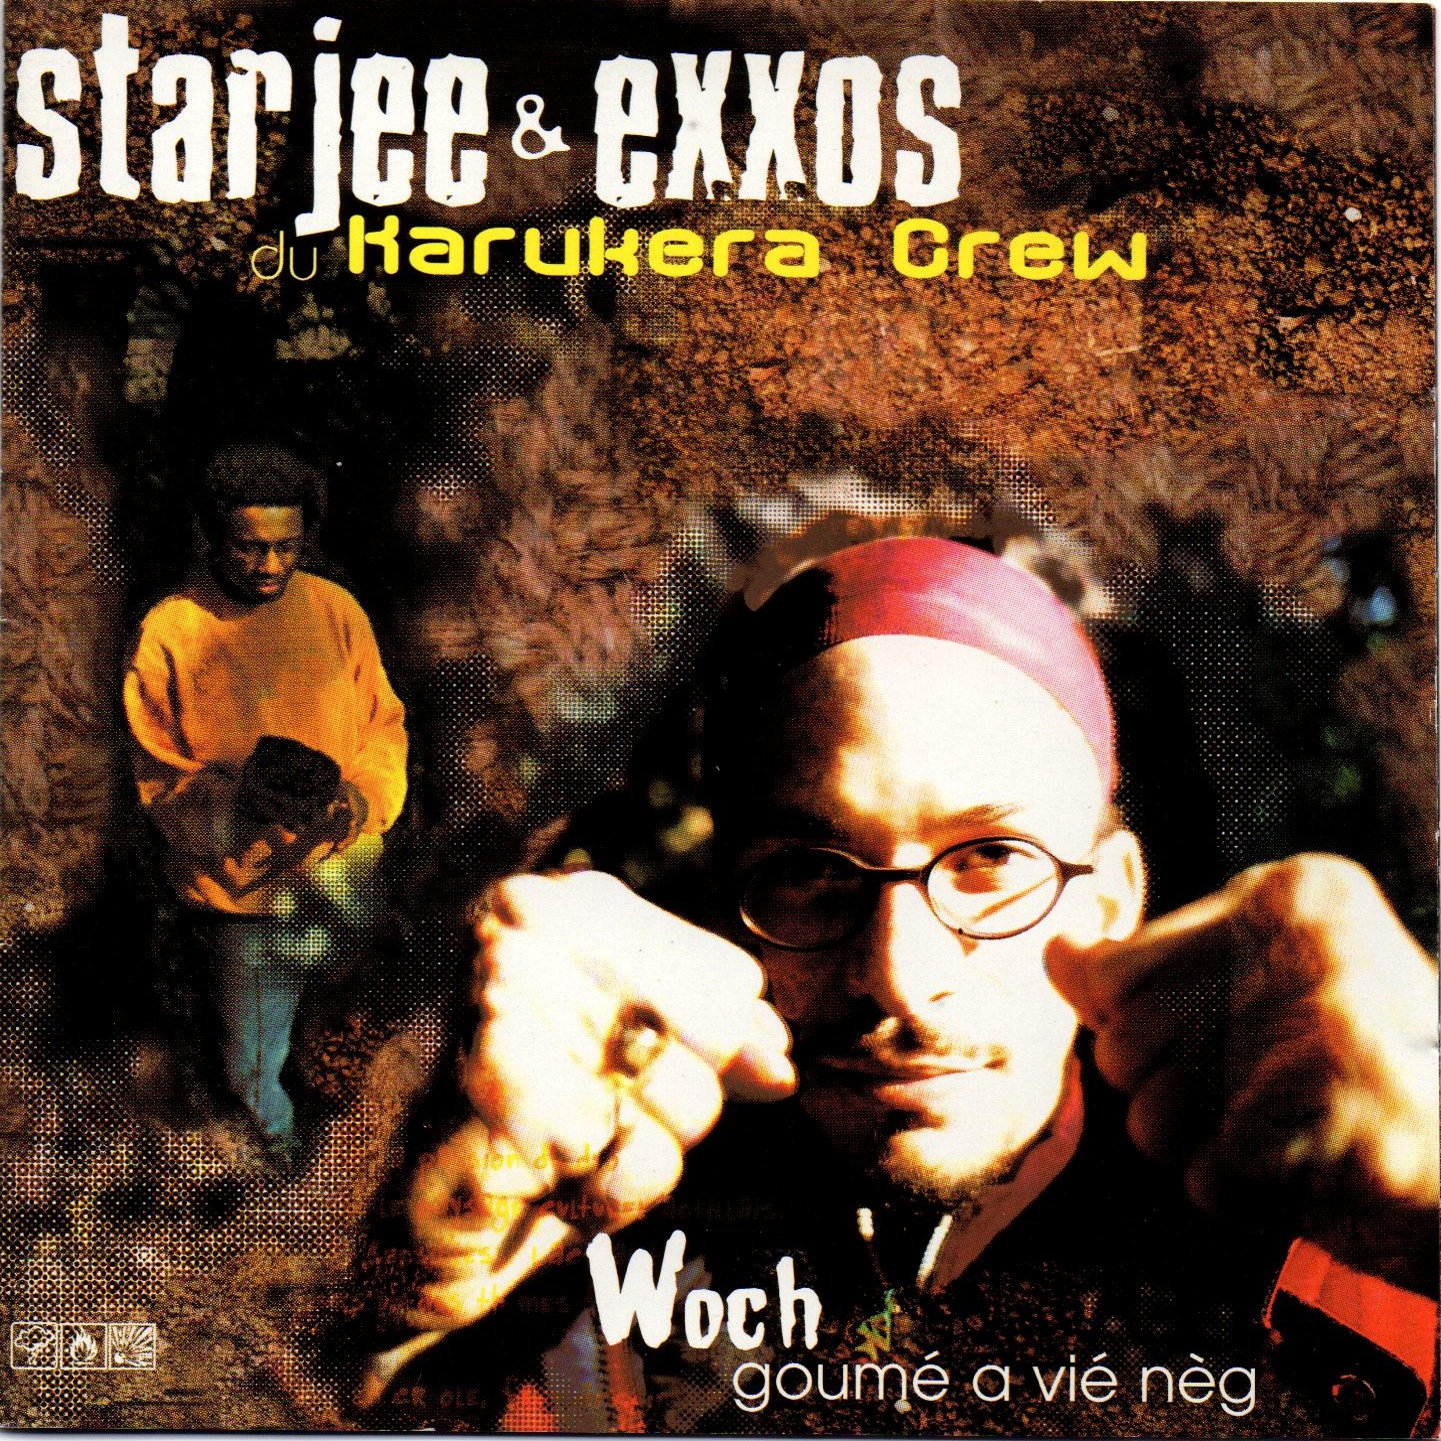 Star Jee and Exxos - Woch Goumé A Vié Nèg (Cover)